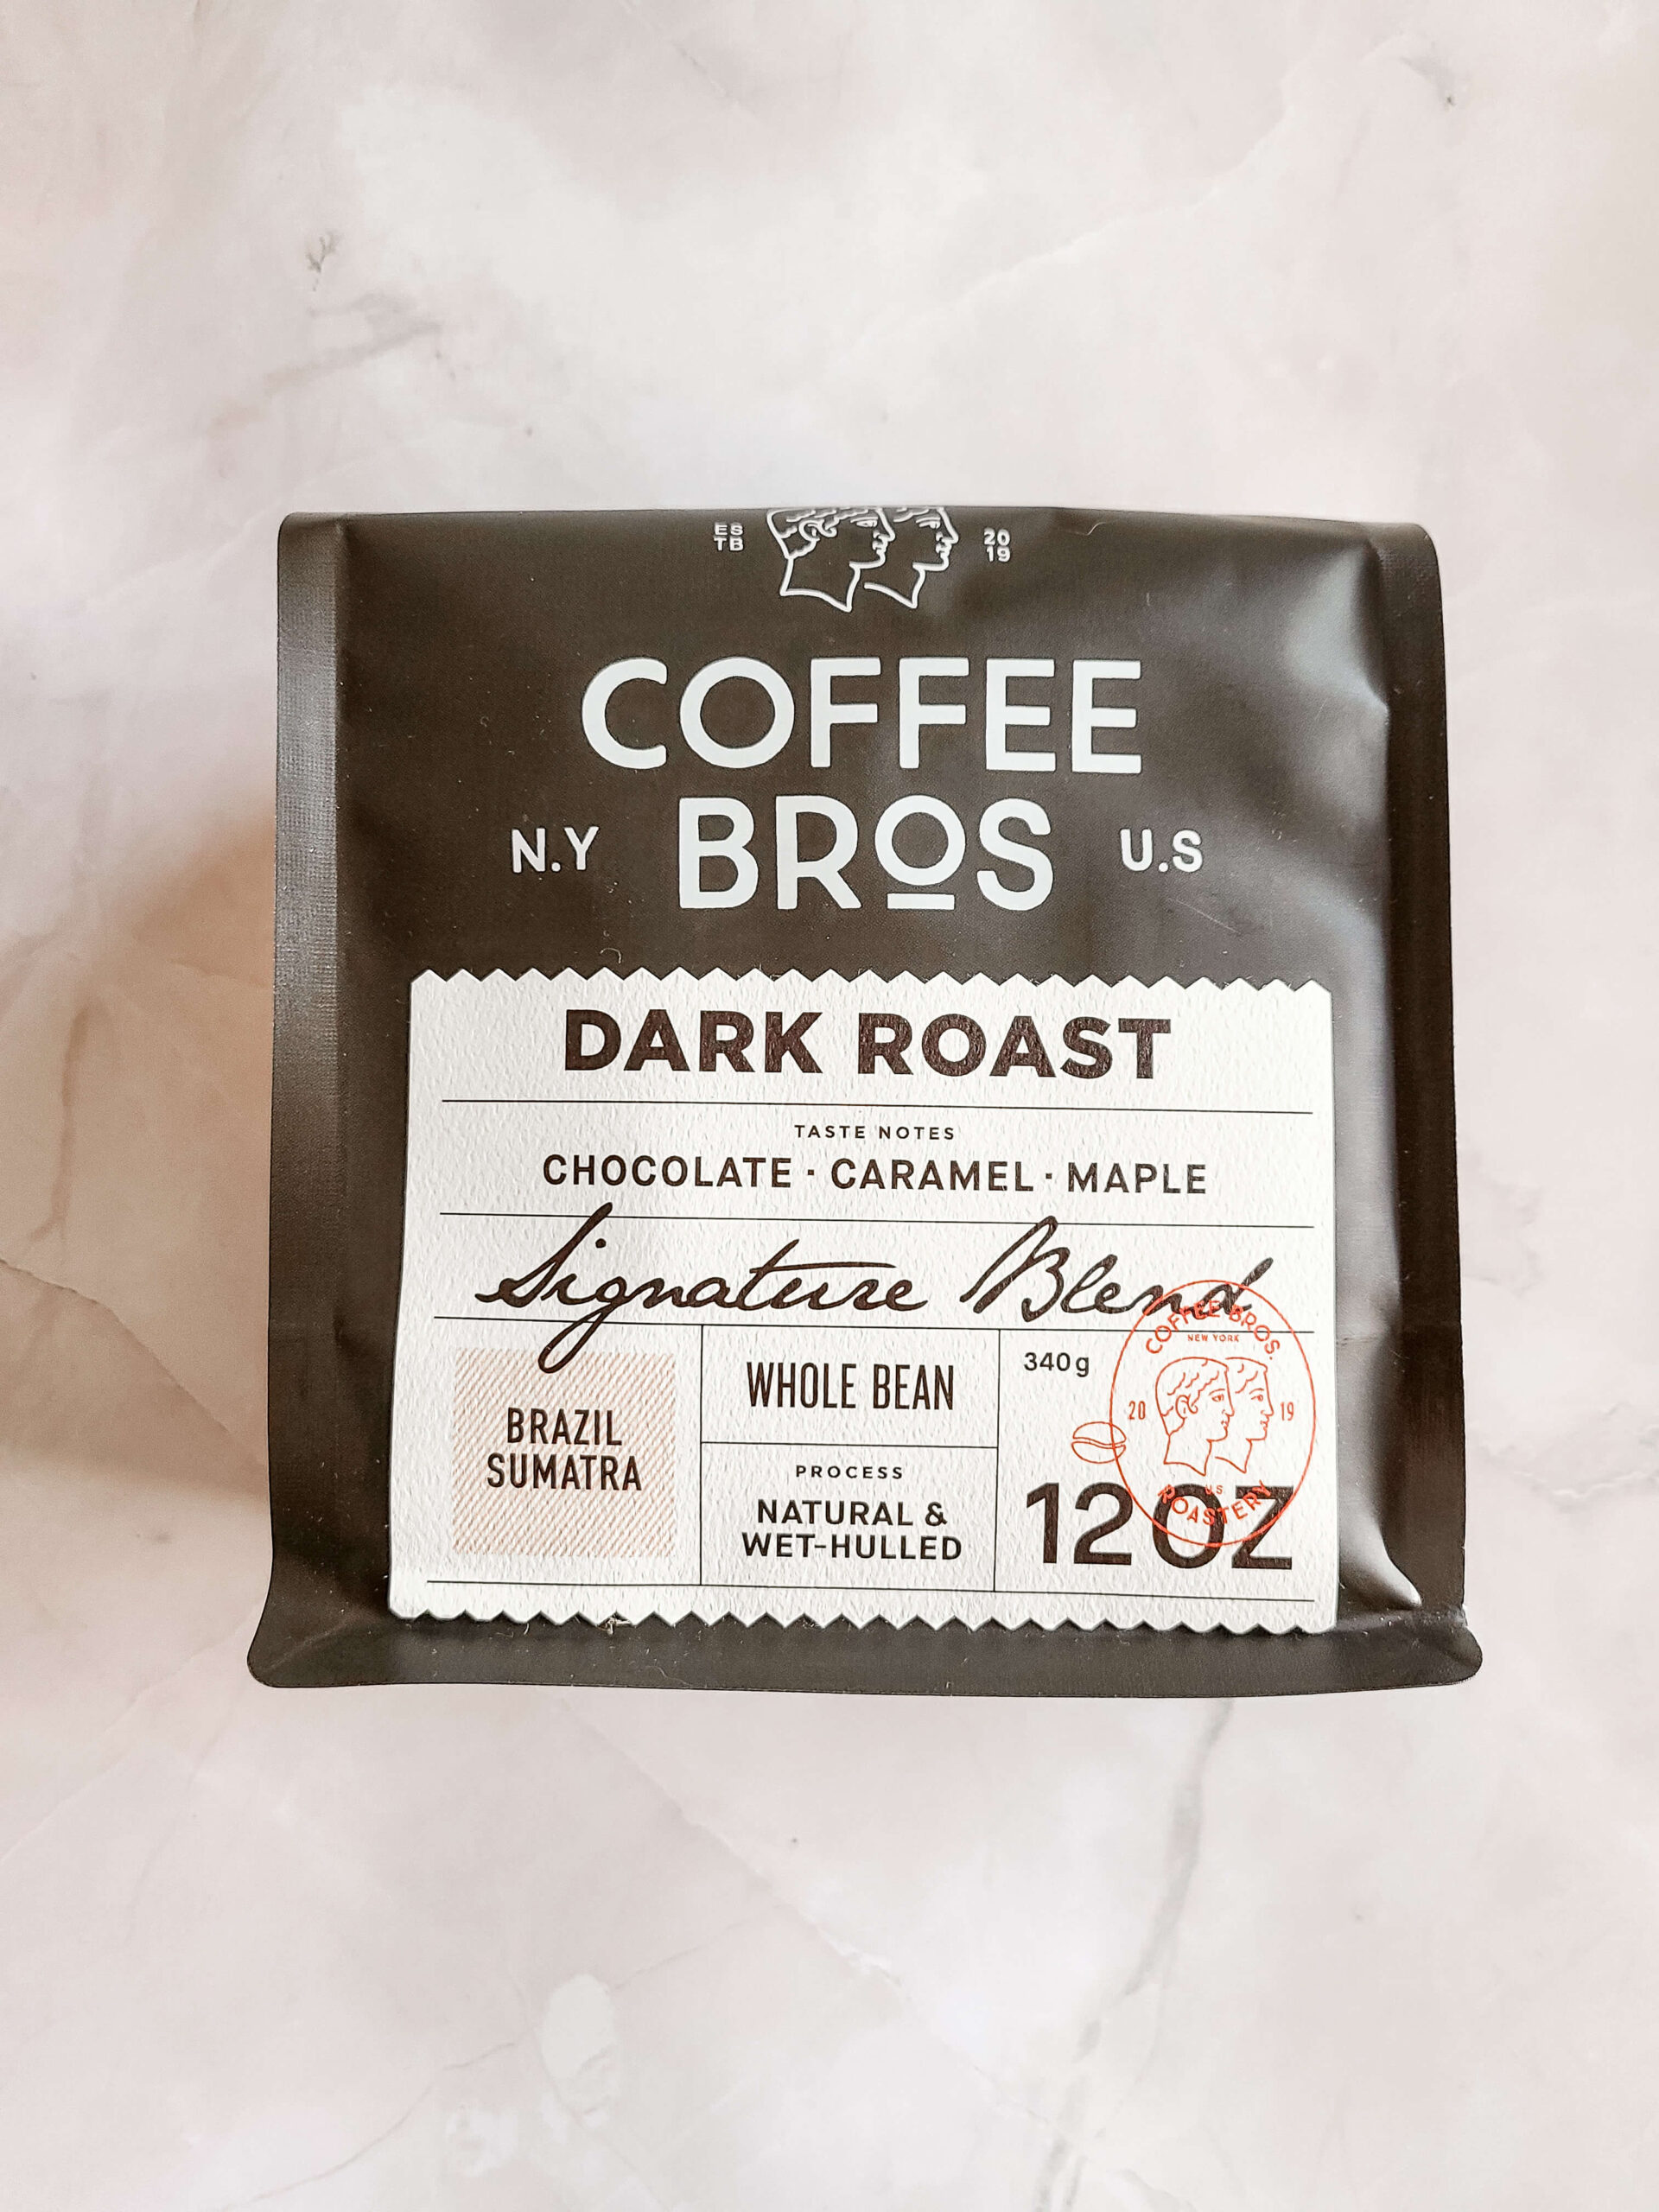 A bag of Dark Roast Coffee from Coffee Bros.